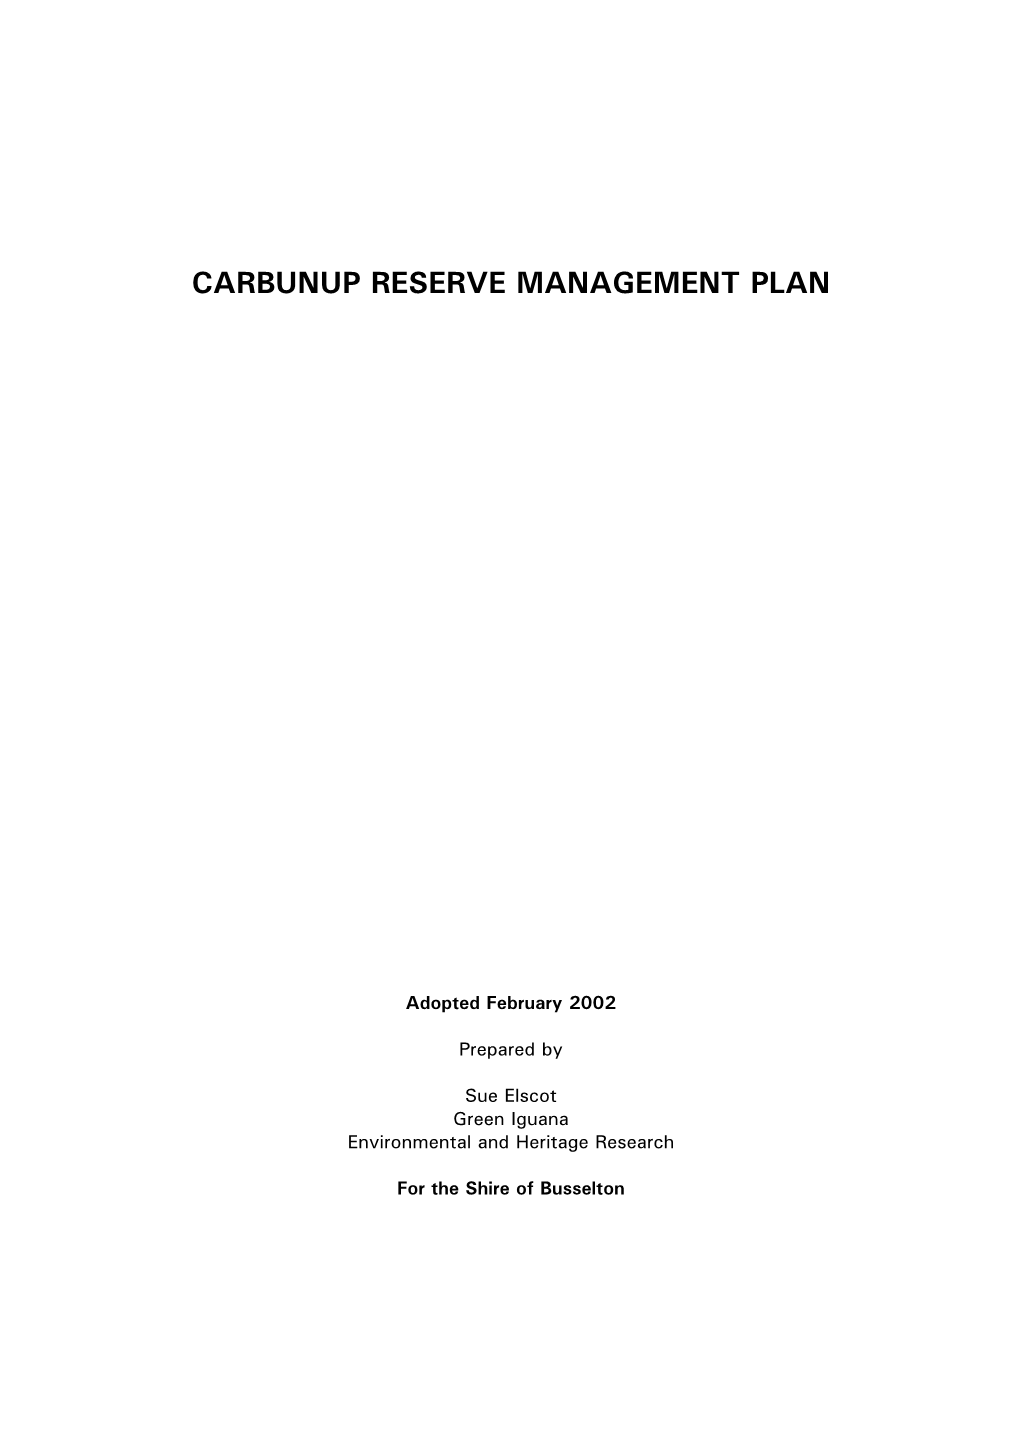 Carbunup Reserve Management Plan